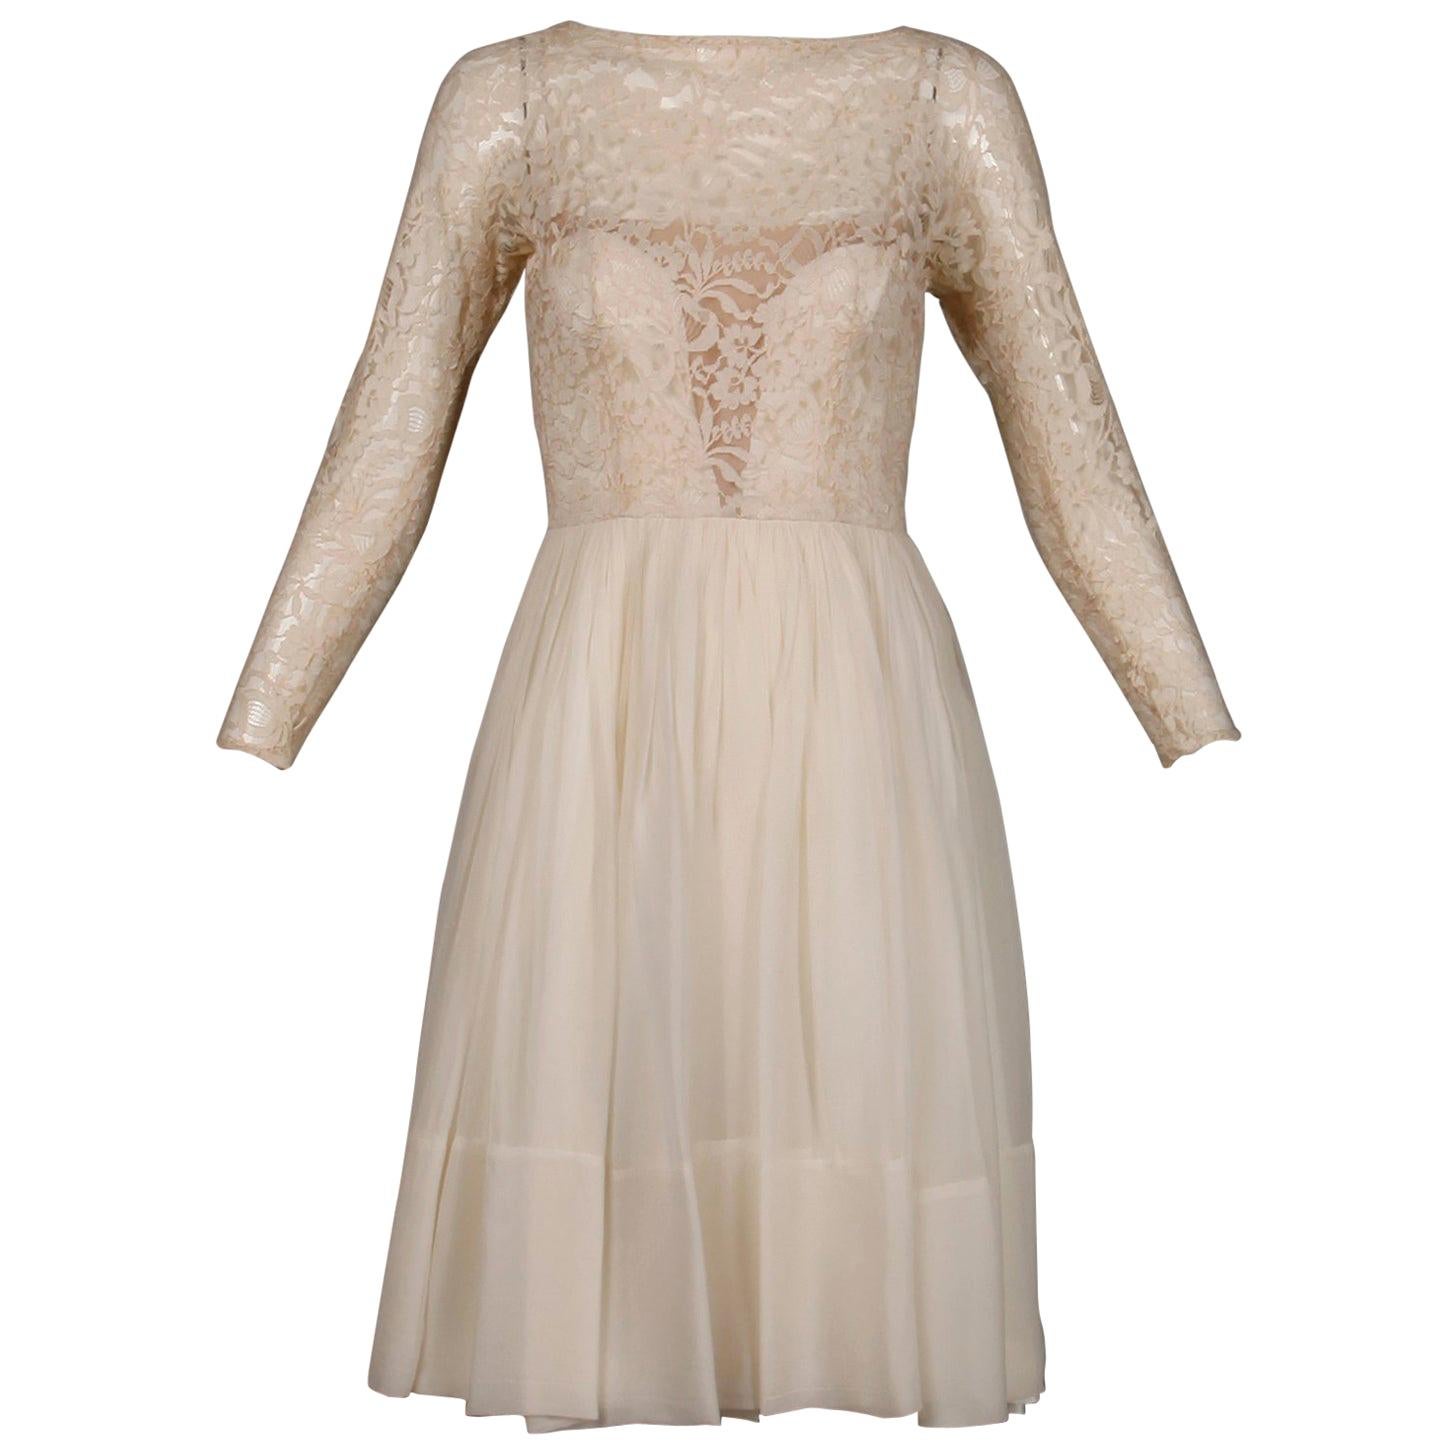 vintage cream dress